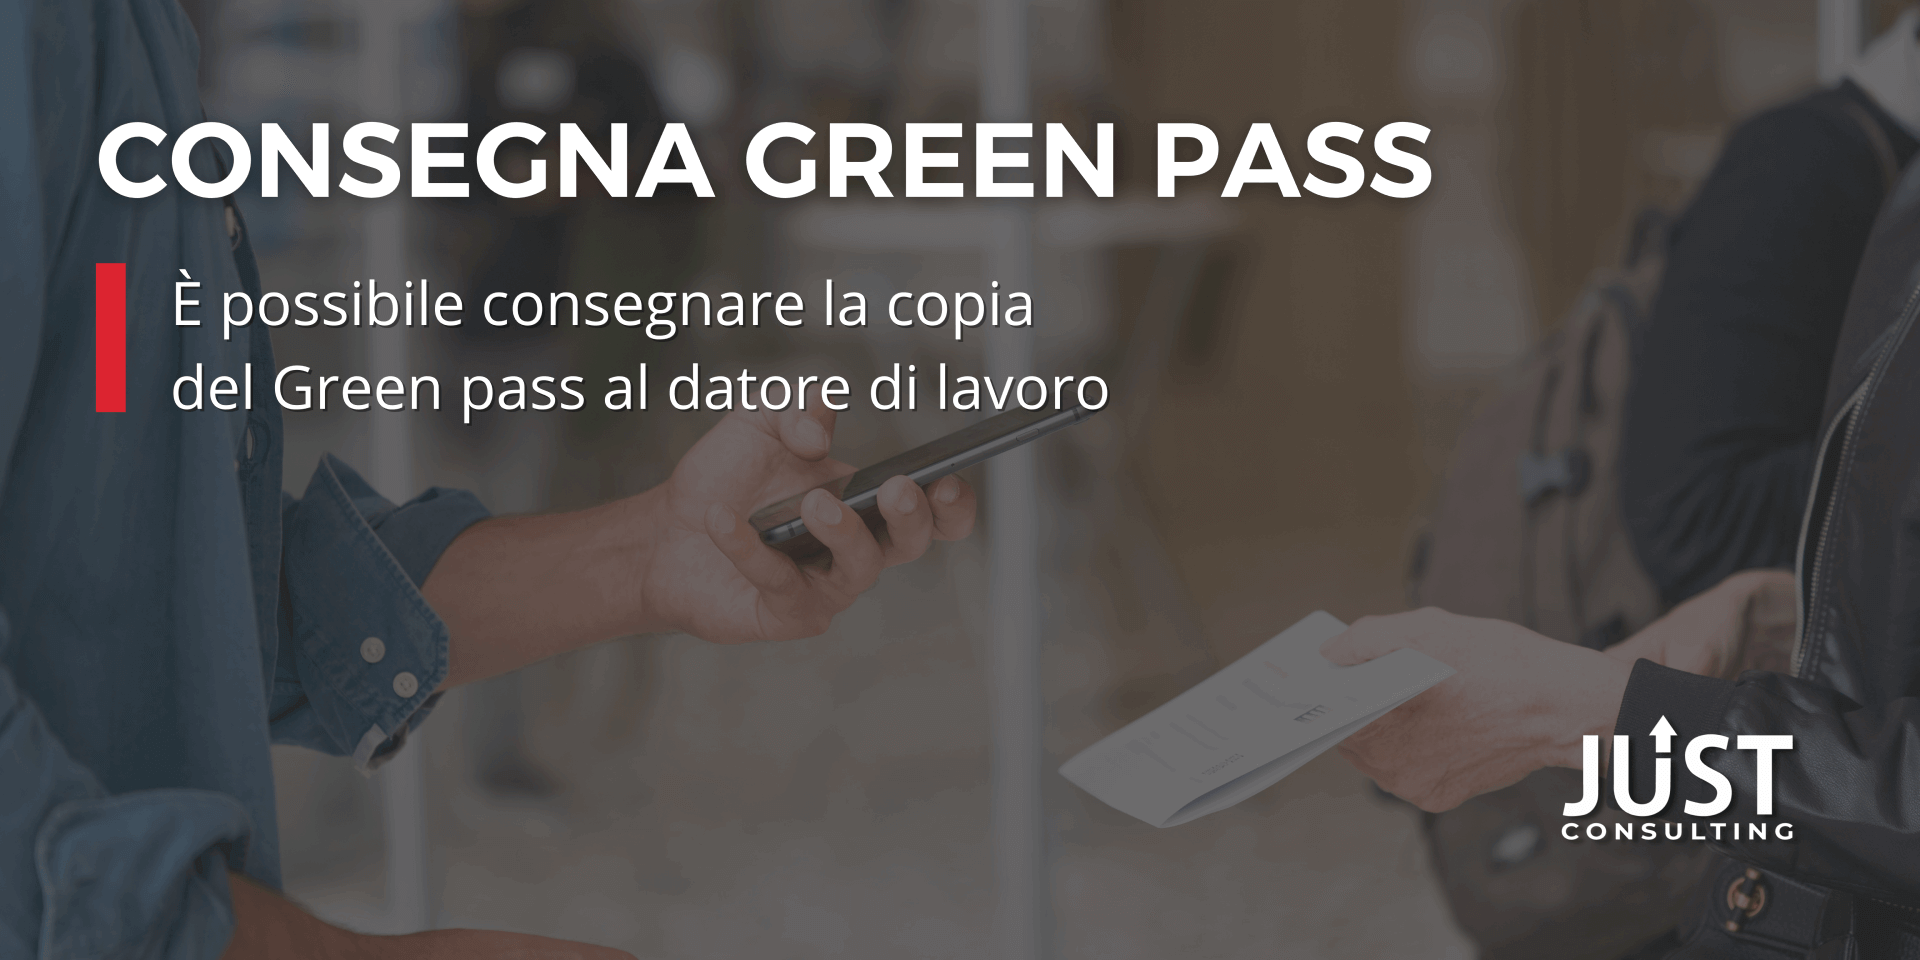 Green pass, legge n. 167/2021, decreto green pass, green pass in azienda, privacy e green pass